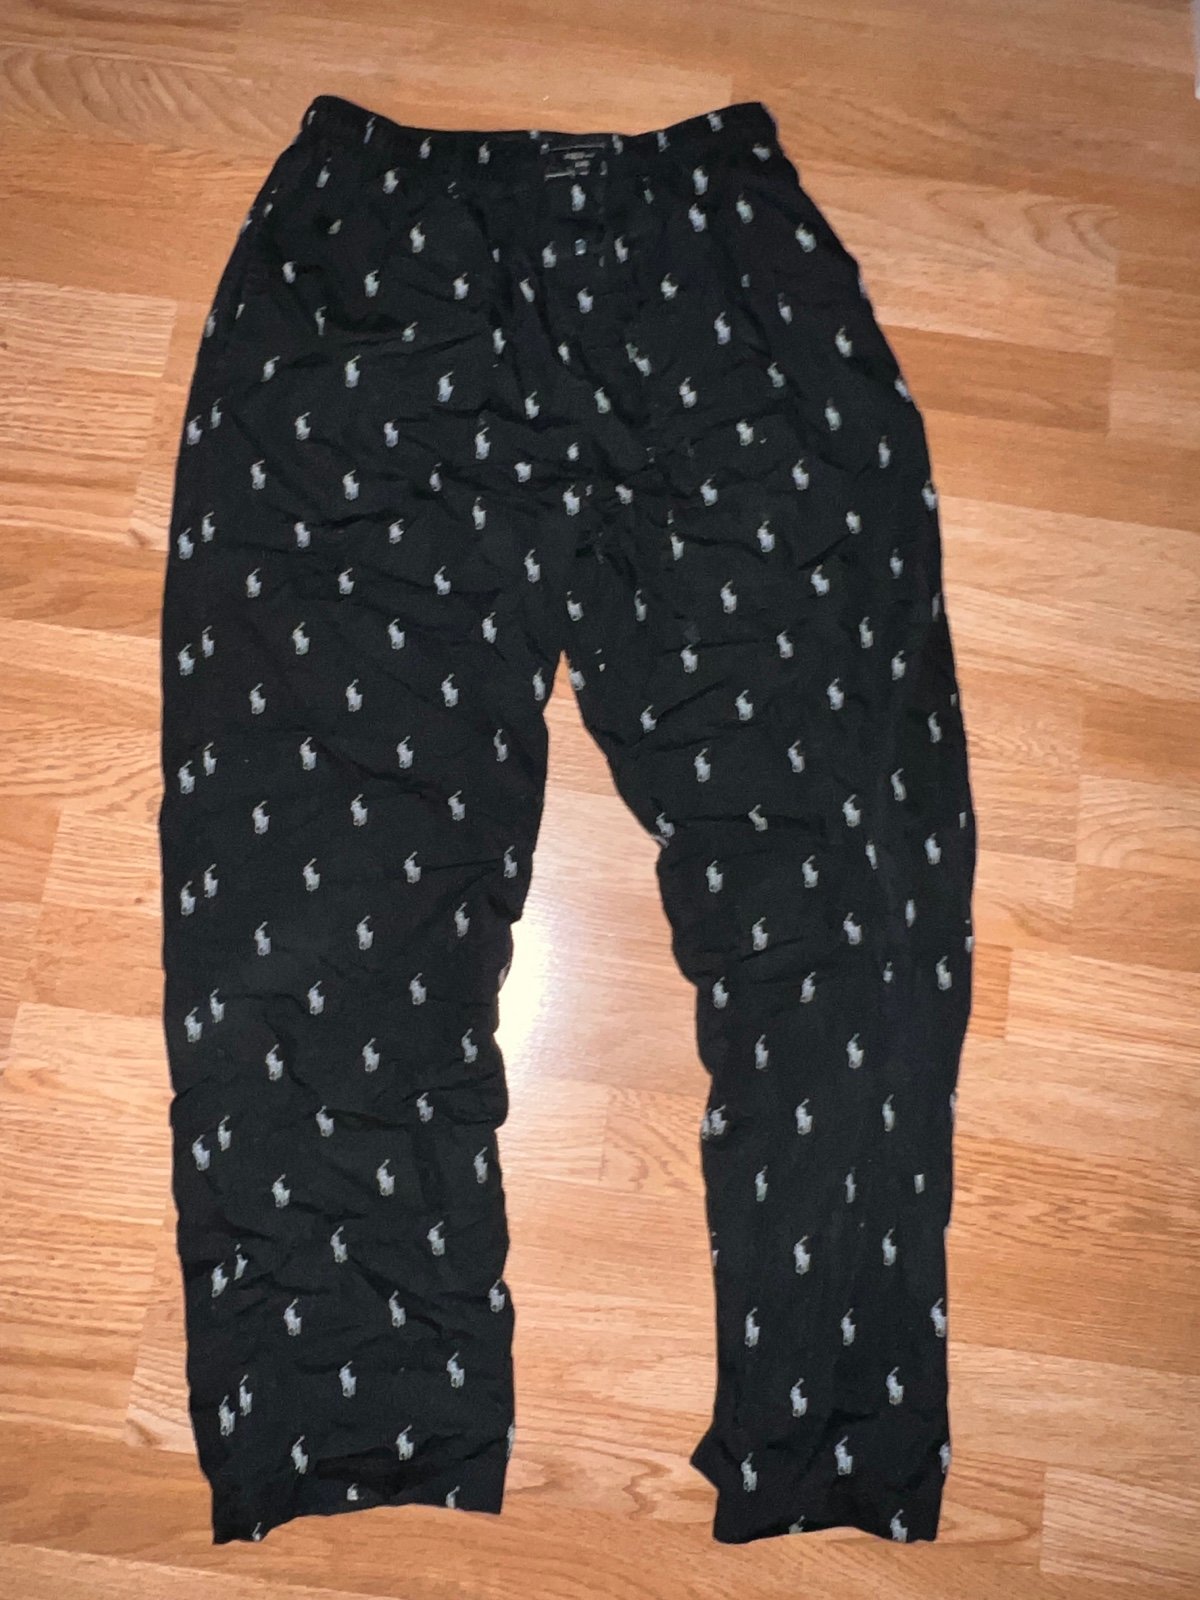 Polo Pants Pajama 8qmHFIkr6